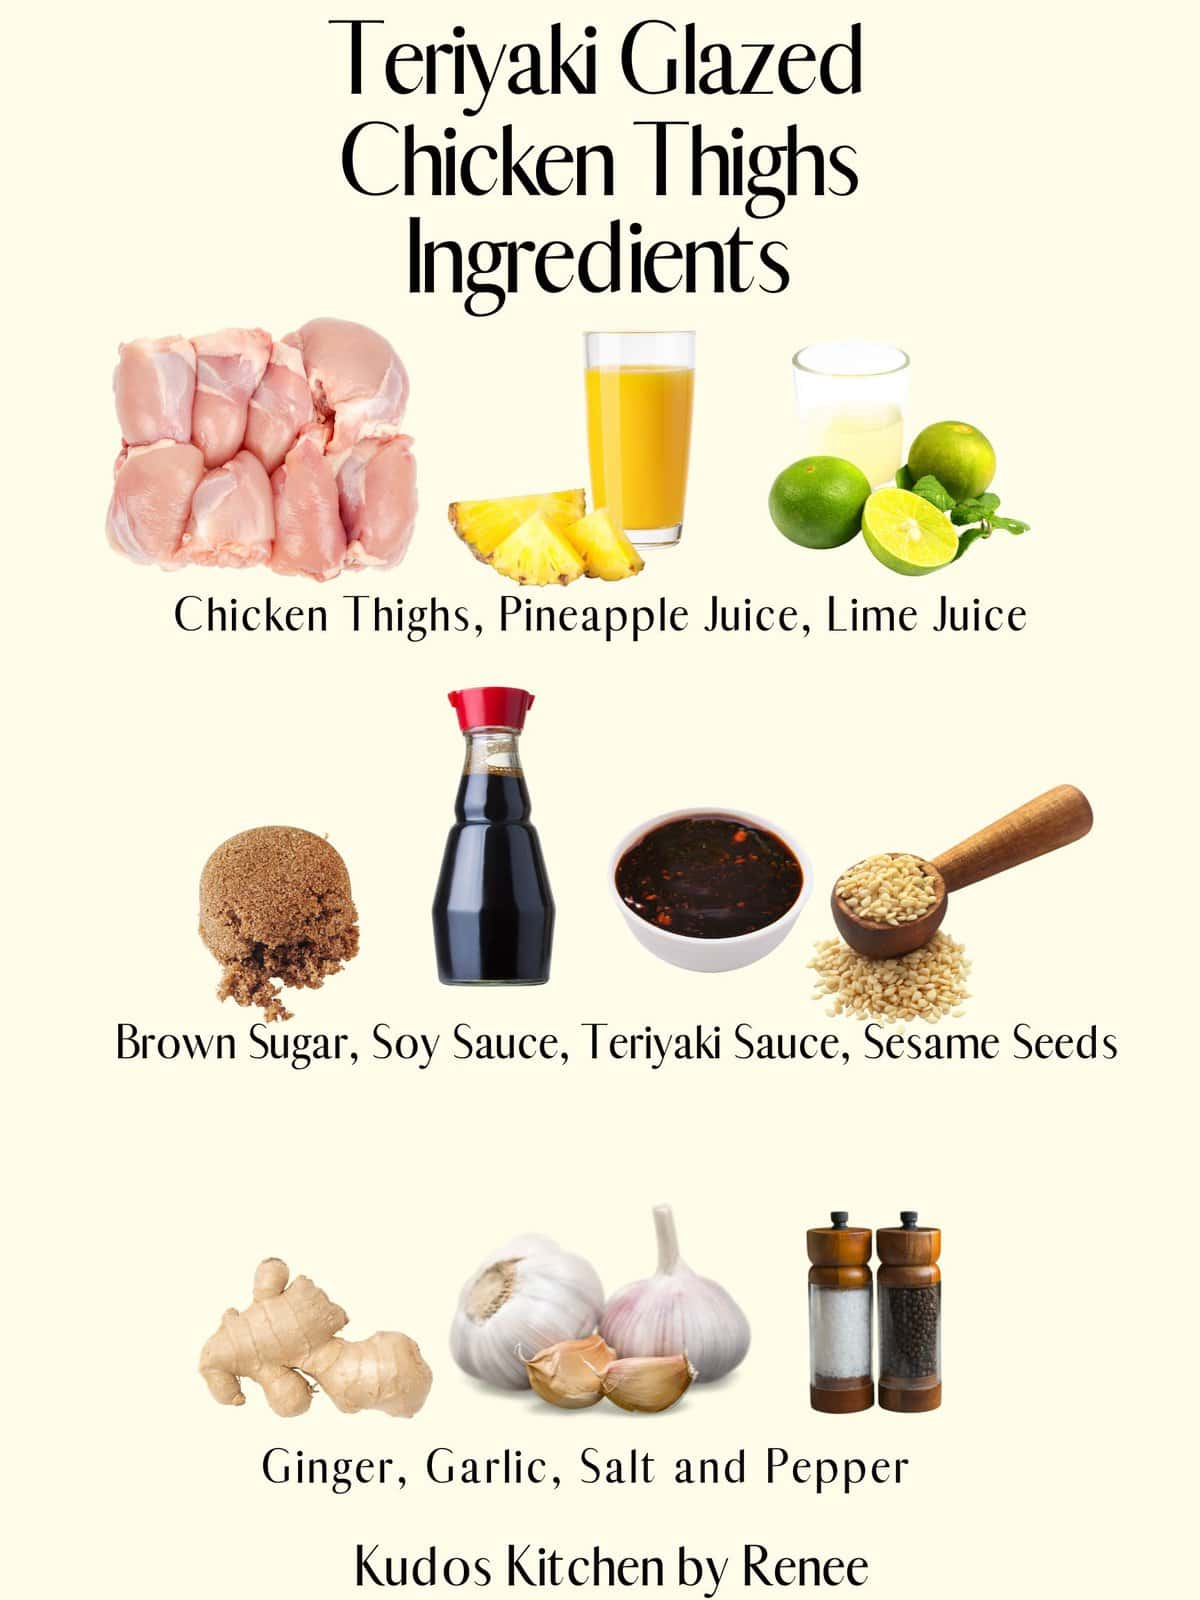 A visual ingredient list for making Teriyaki Glazed Chicken Thighs.